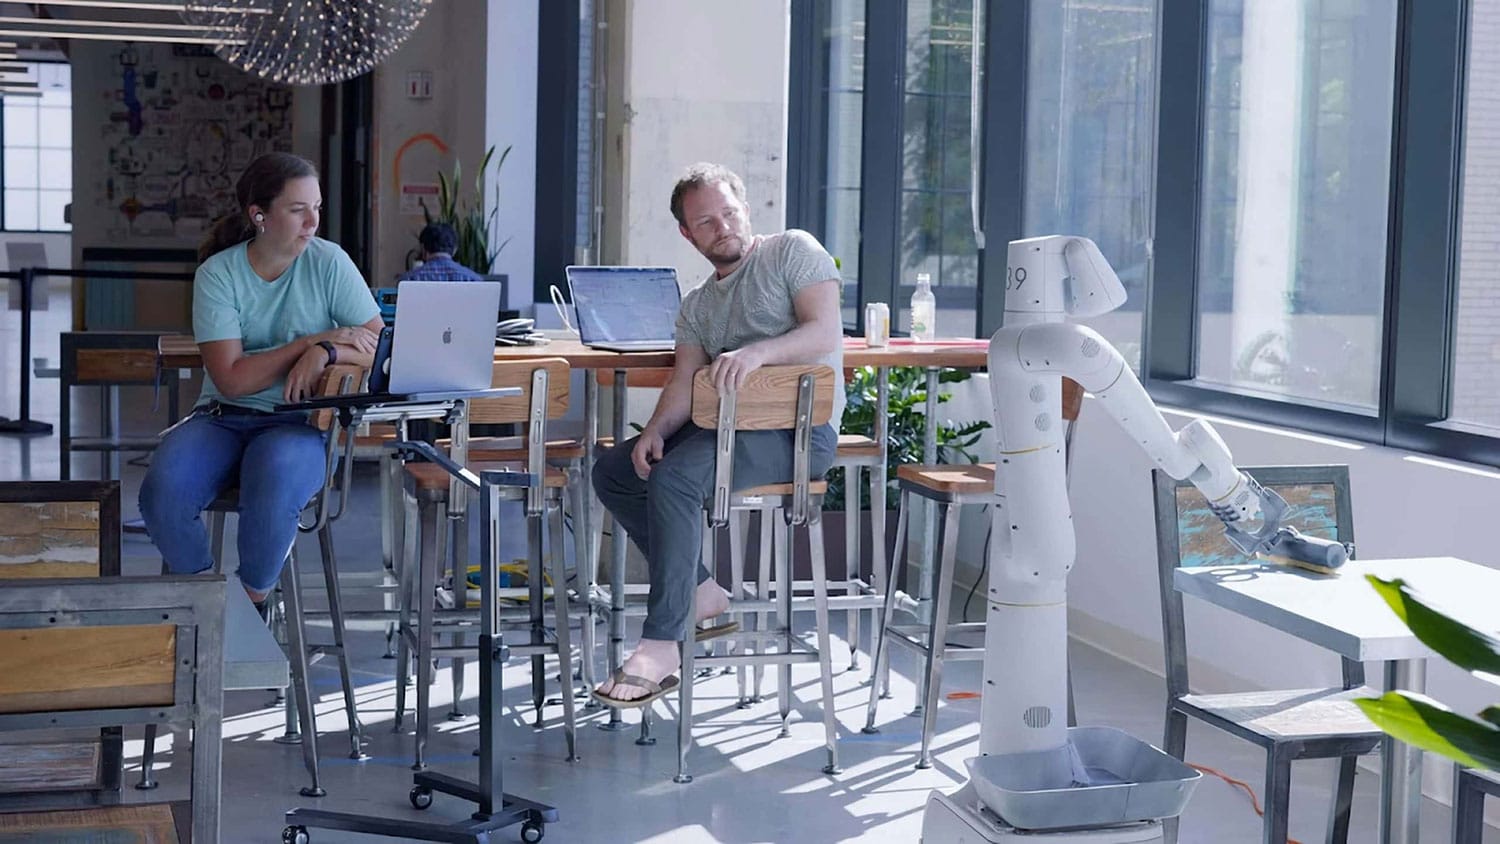 Alphabet’s Everyday Robots test fleet performs some custodial tasks around offices.